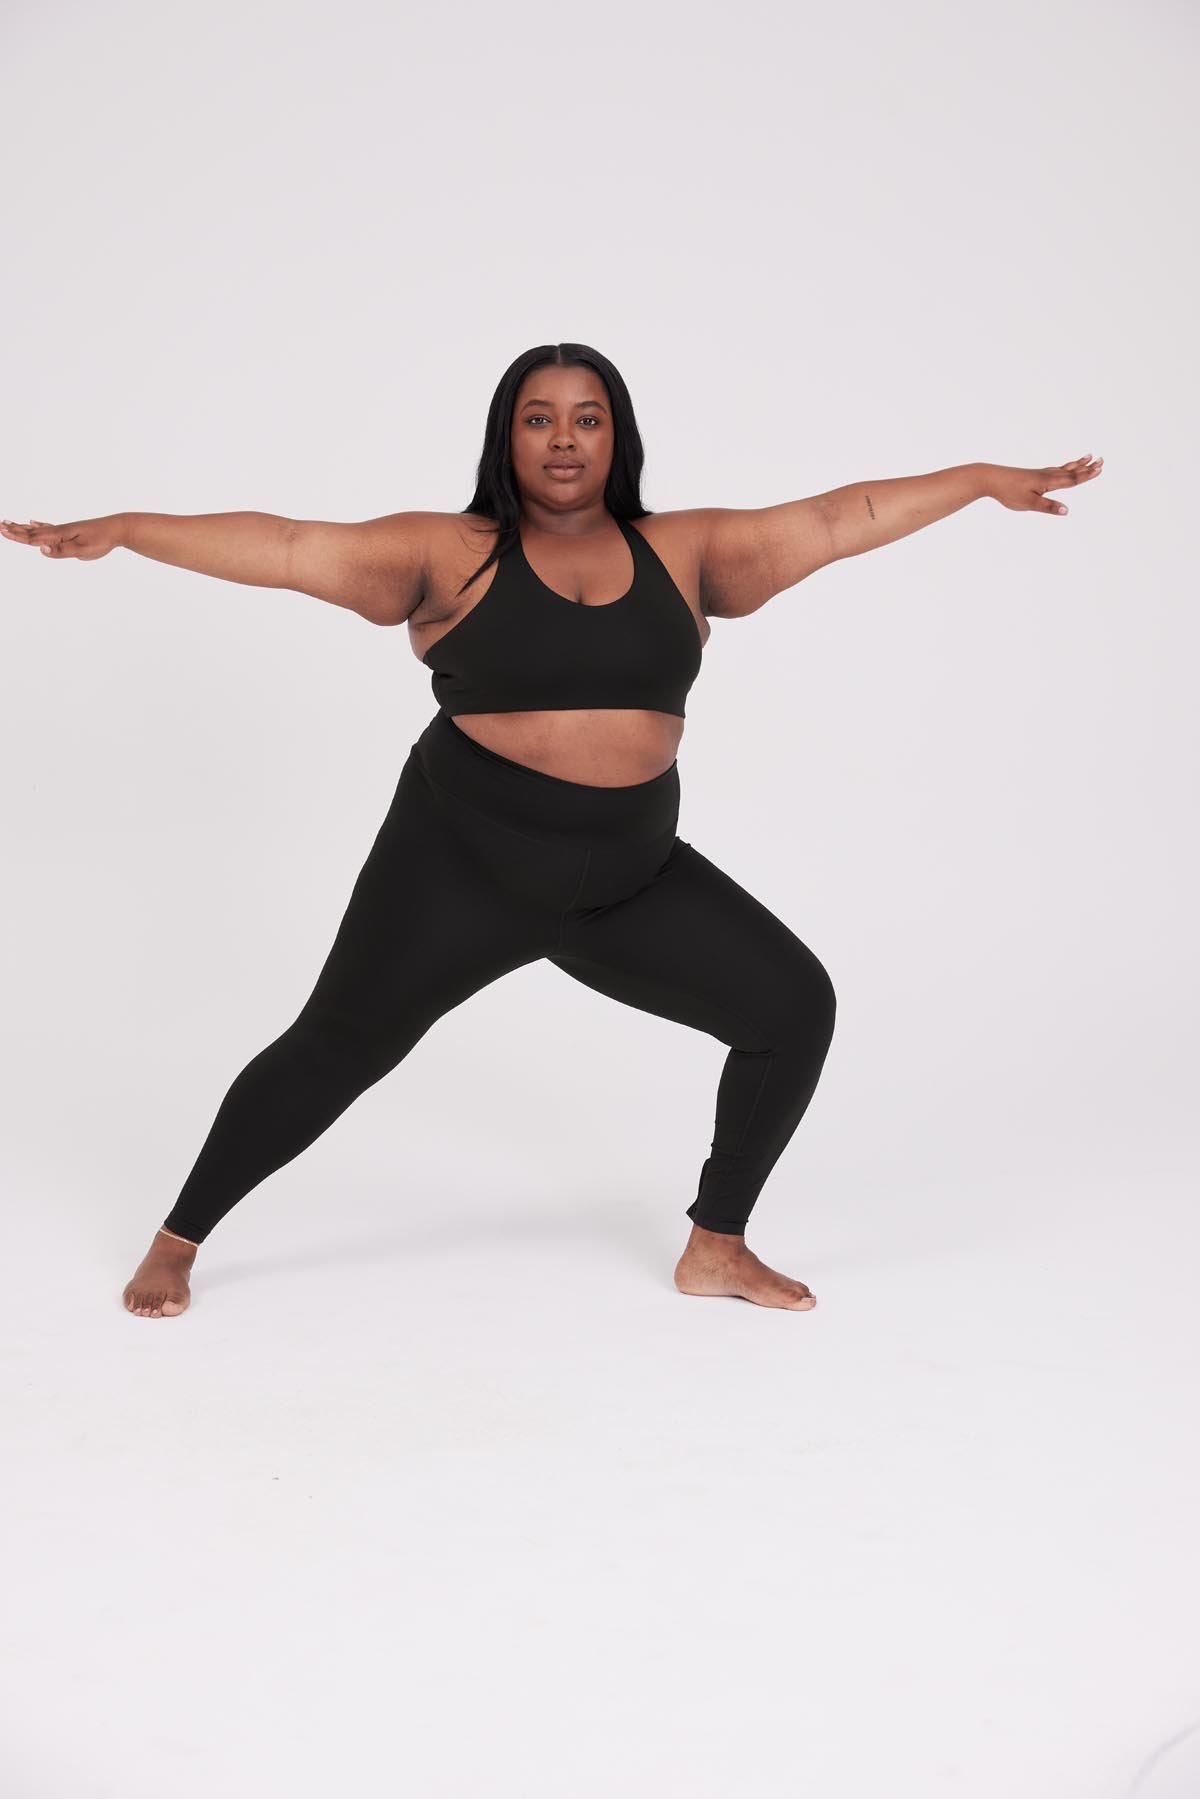 FELEMO Bootcut Flare Black Yoga Pants for Women Loose Fit High